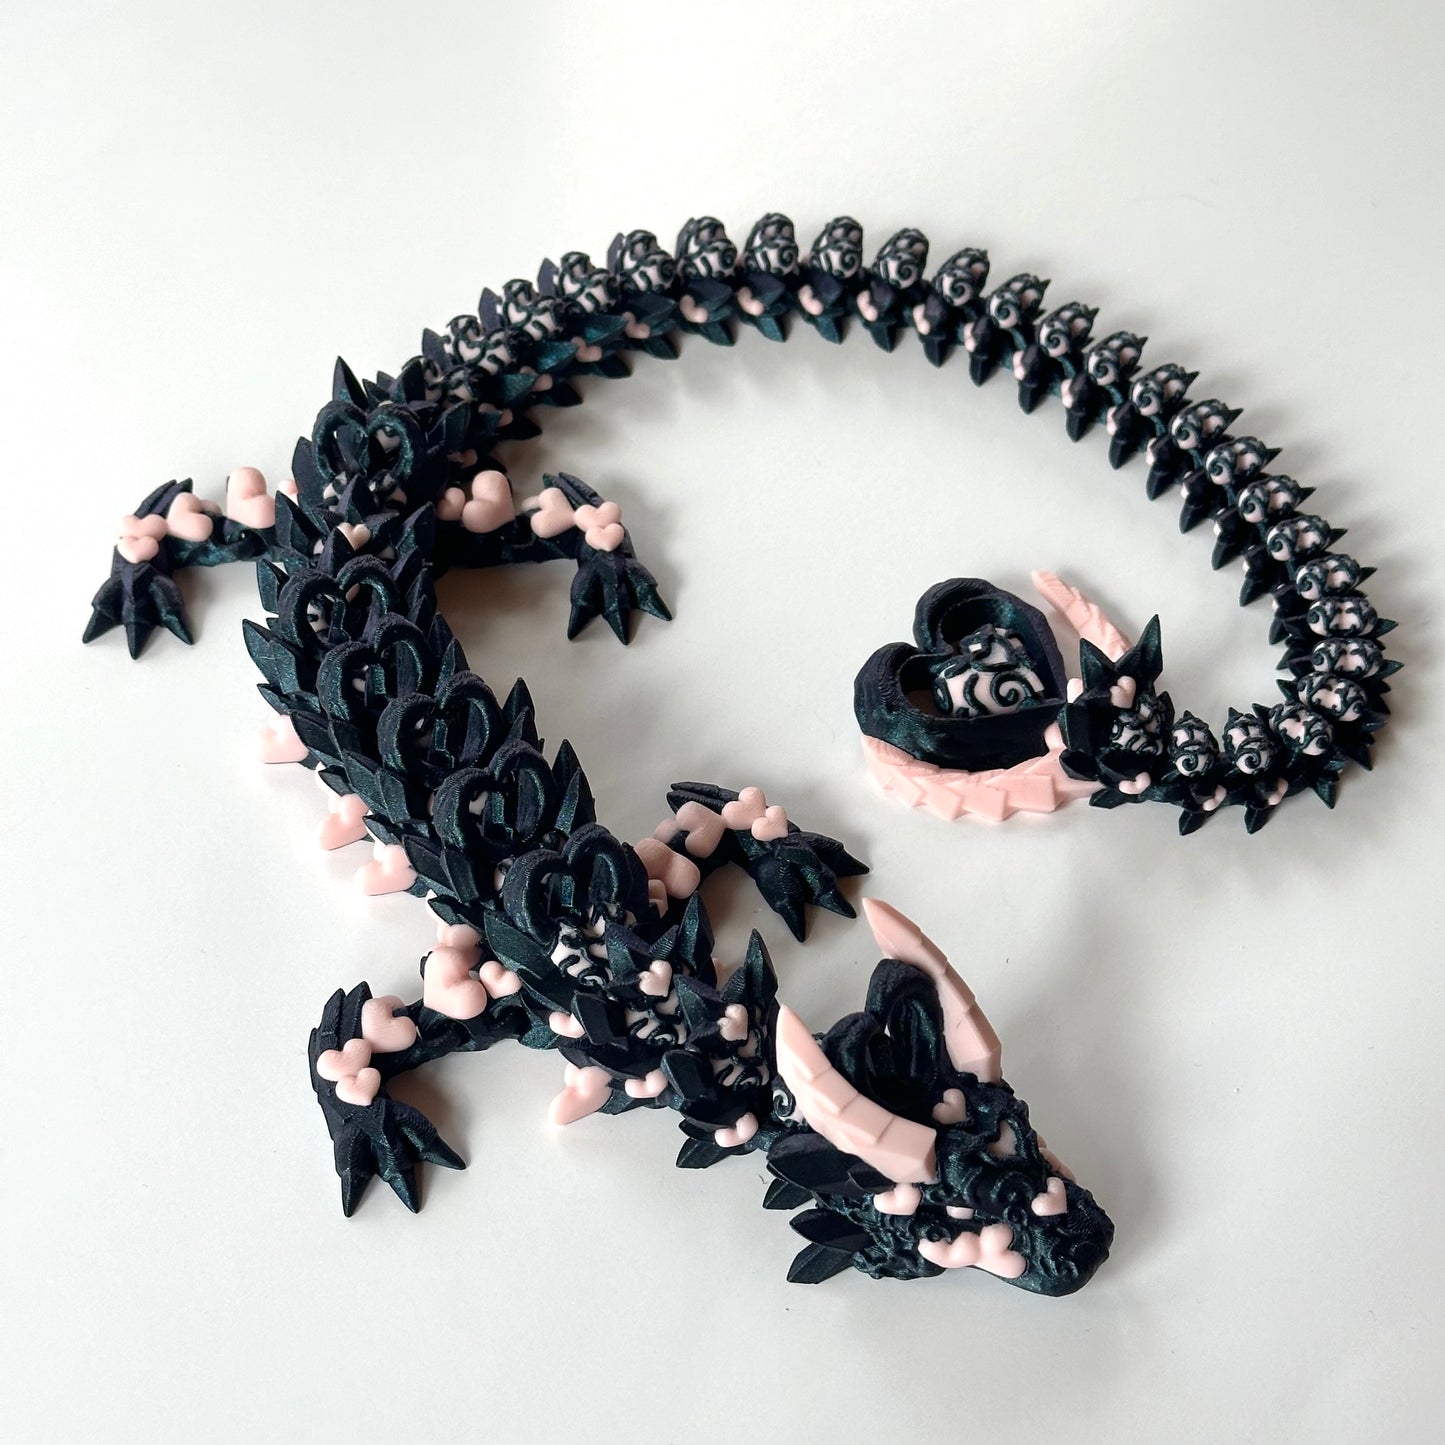 Large Dark Heart Dragon - 3D Printed Articulating Figure